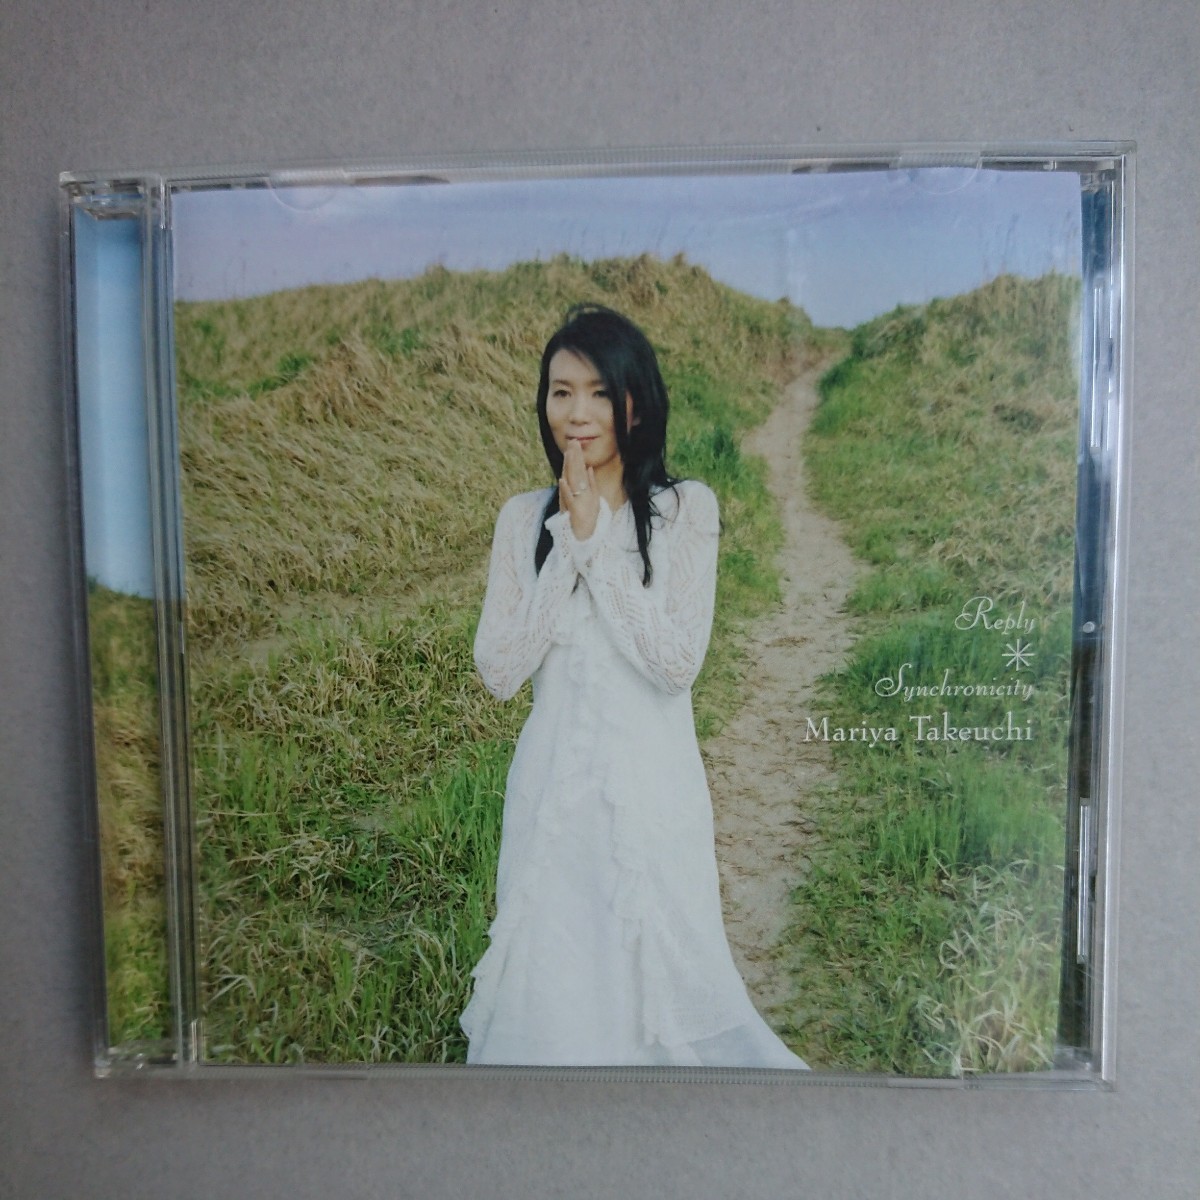 [ Takeuchi Mariya ответ / synchronizer ni City ( замечательный ..)] б/у одиночный CD Mariya Takeuchi Reply Synchronicity